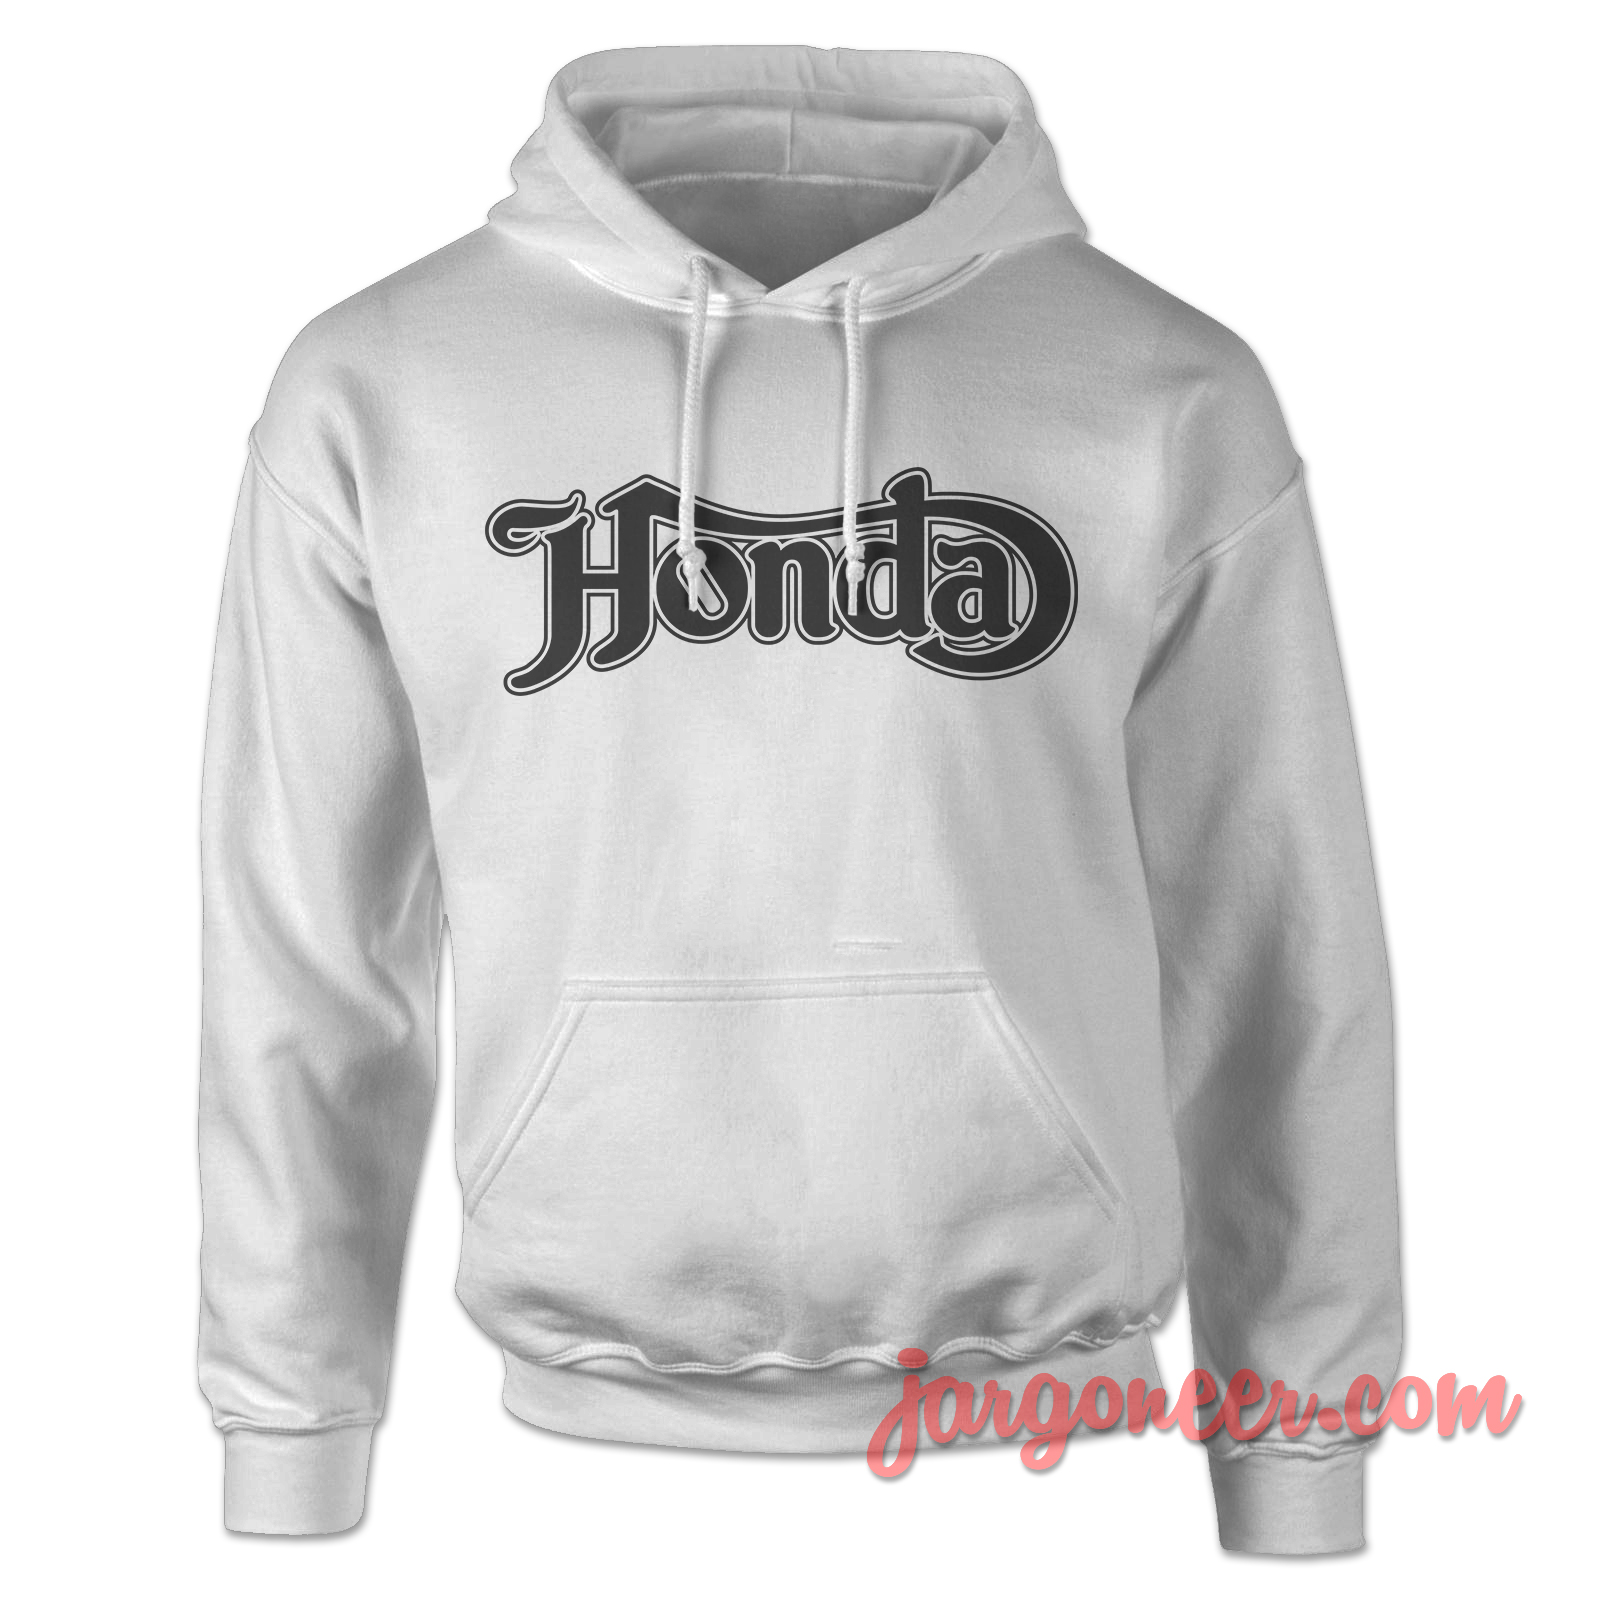 Honda In Norton Style White Hoody - Shop Unique Graphic Cool Shirt Designs